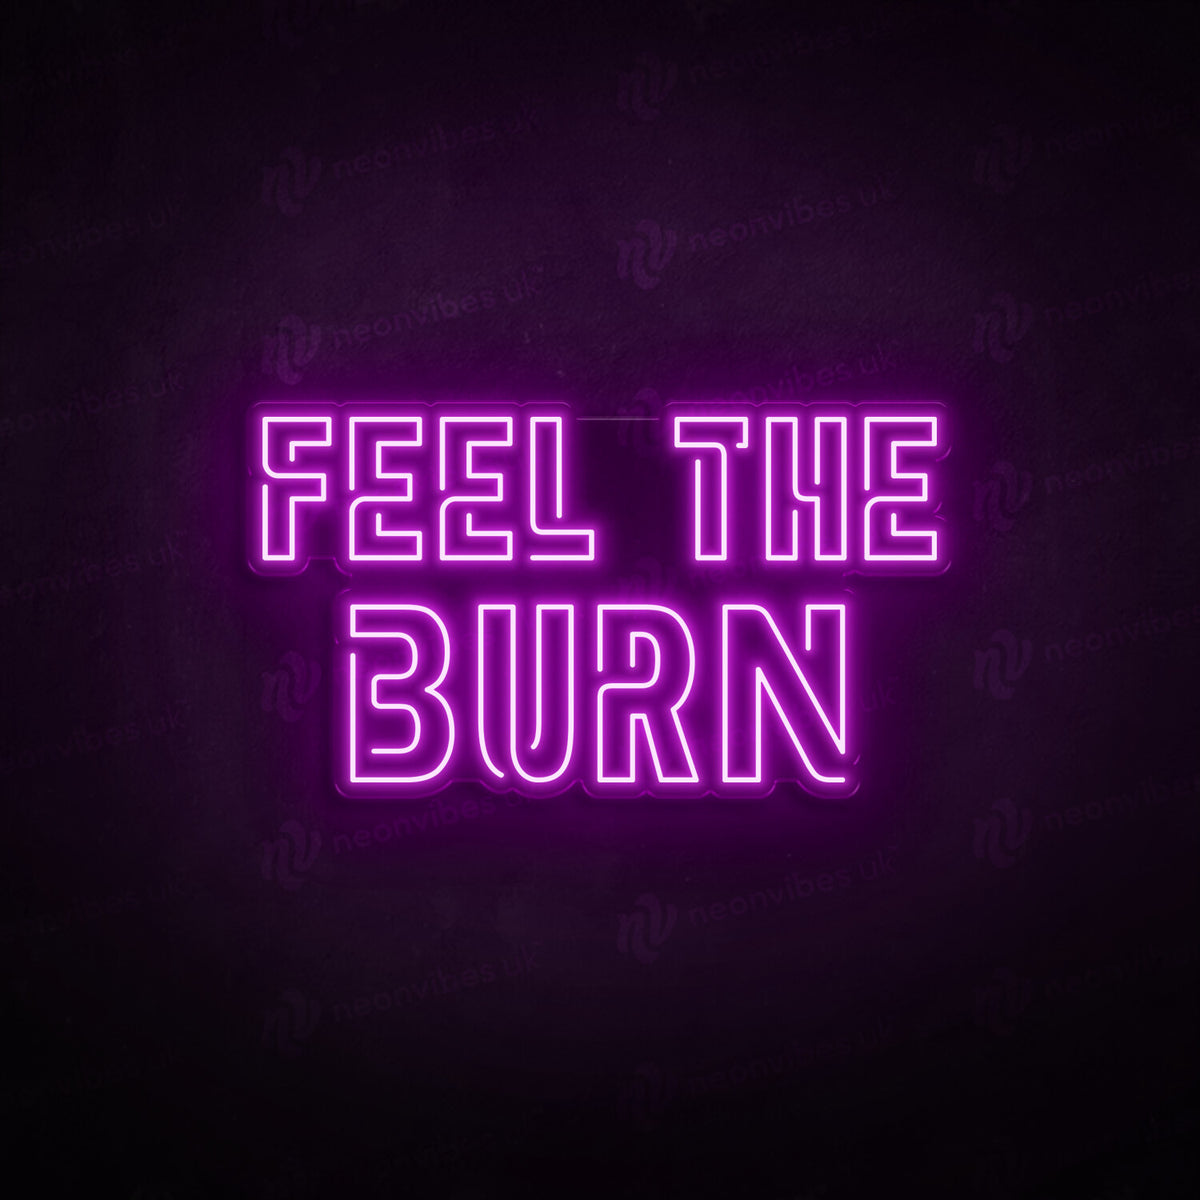 Feel the burn neon sign